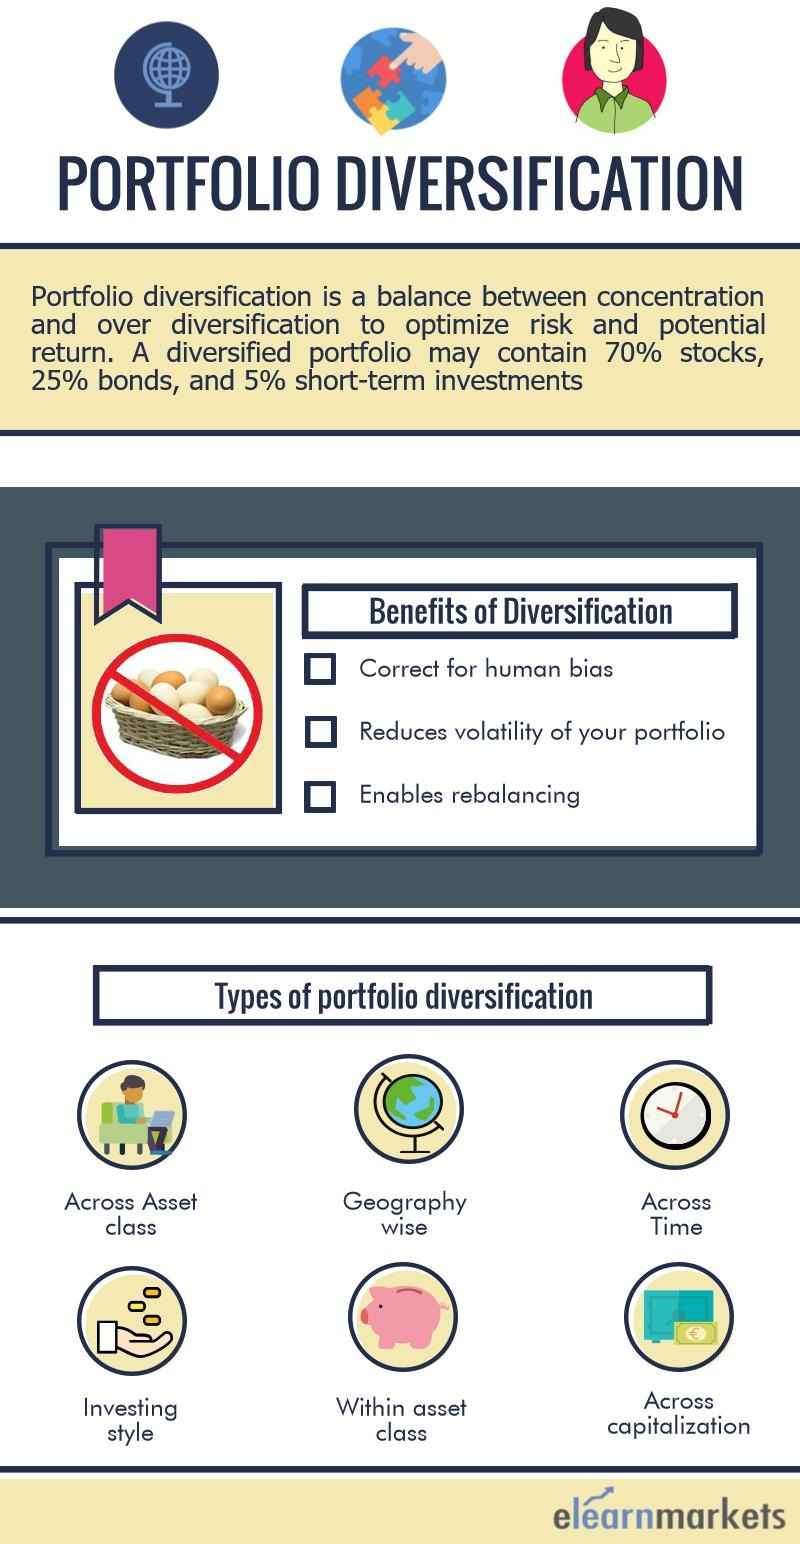 Portfolio Diversification - Invest across all Asset Classes 2